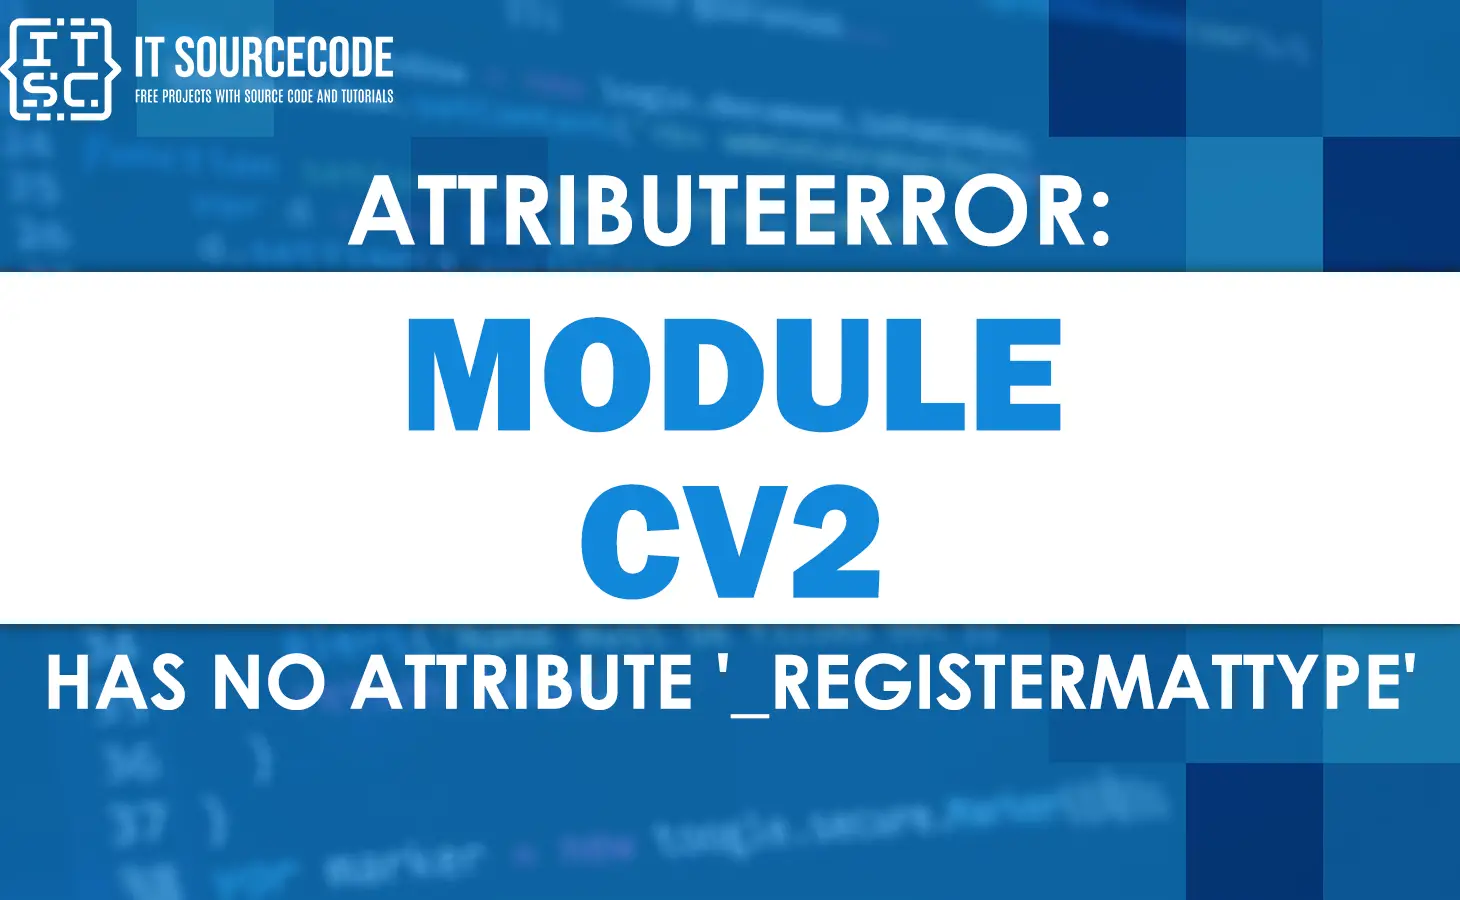 Attributeerror module 'cv2' has no attribute '_registermattype'